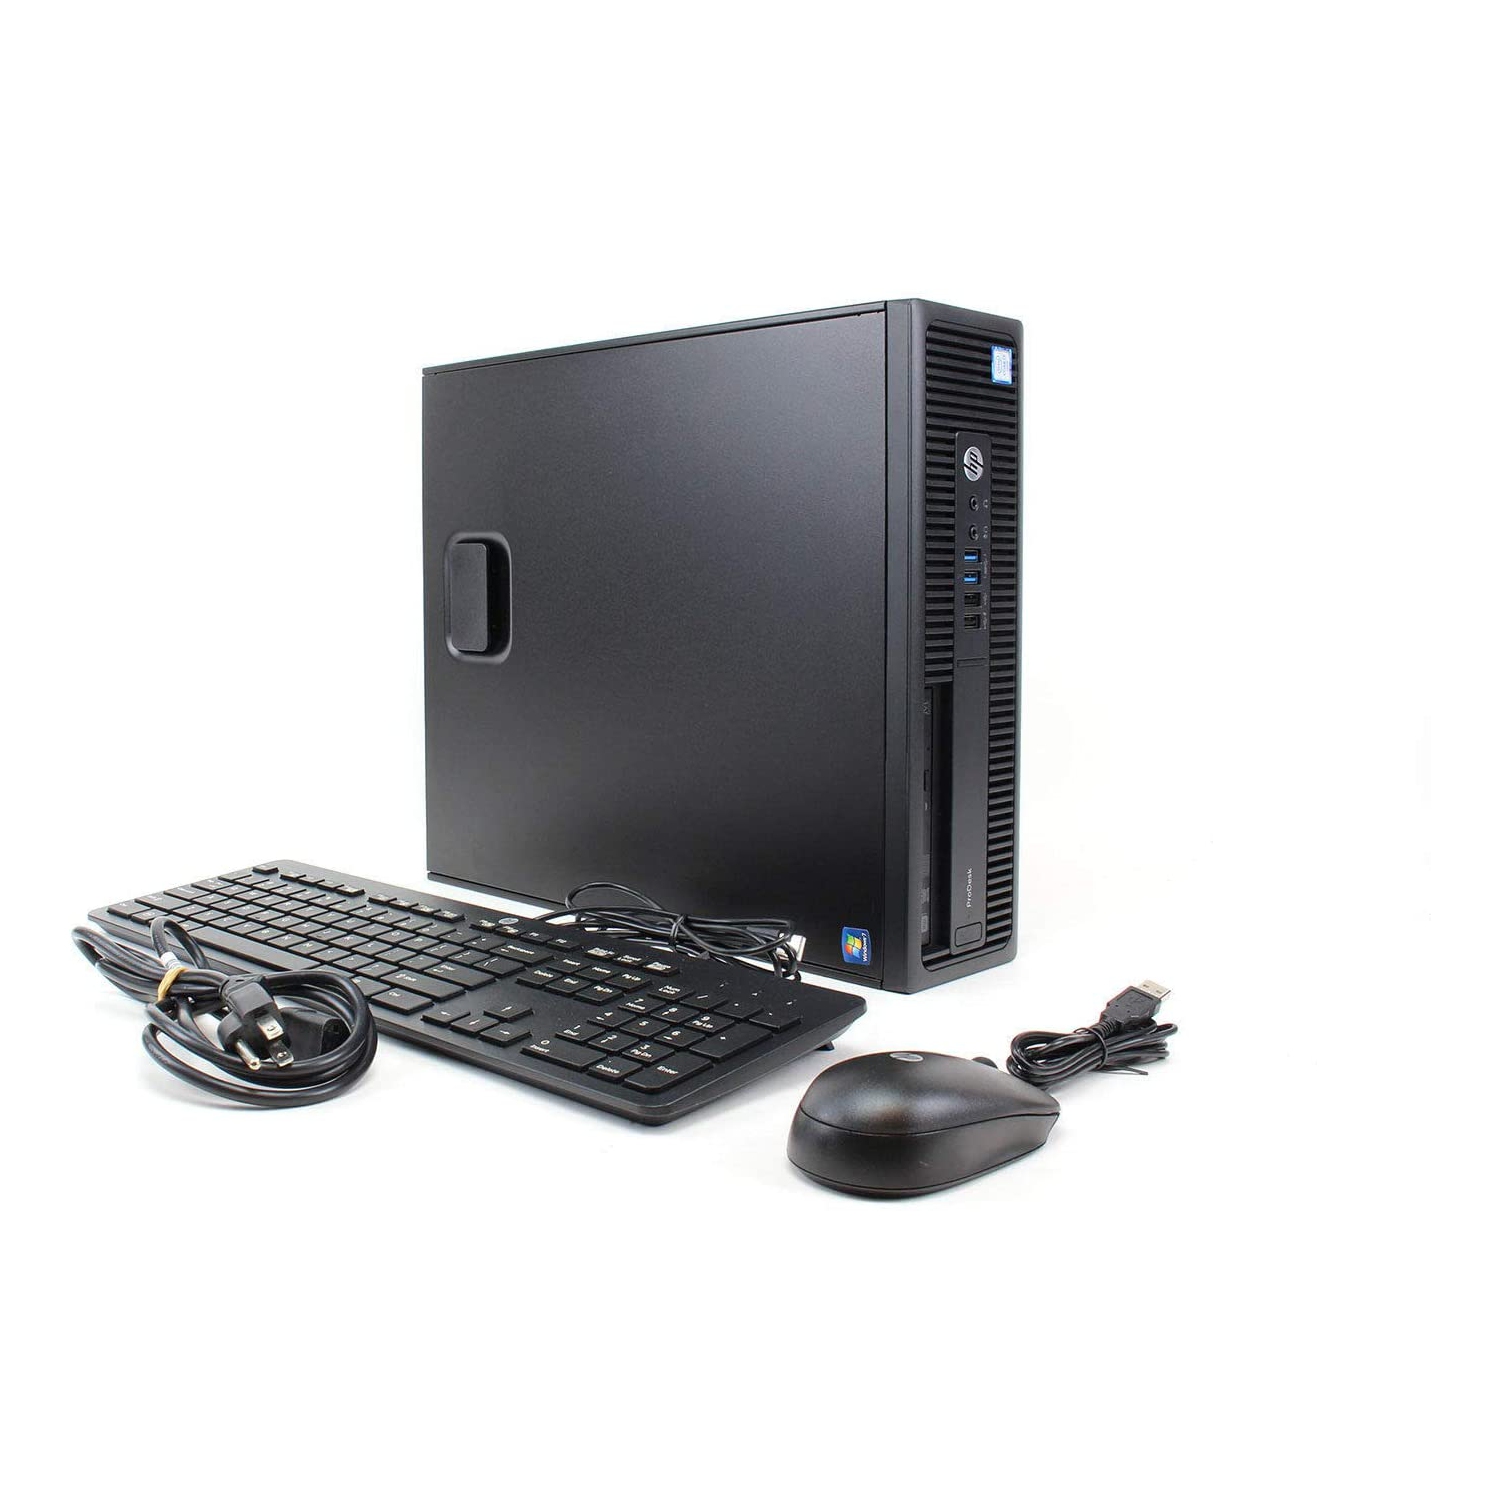 Gaming PC - HP ProDesk 600 G2 SFF Desktop - Intel Core i5 @ 3.2GHz